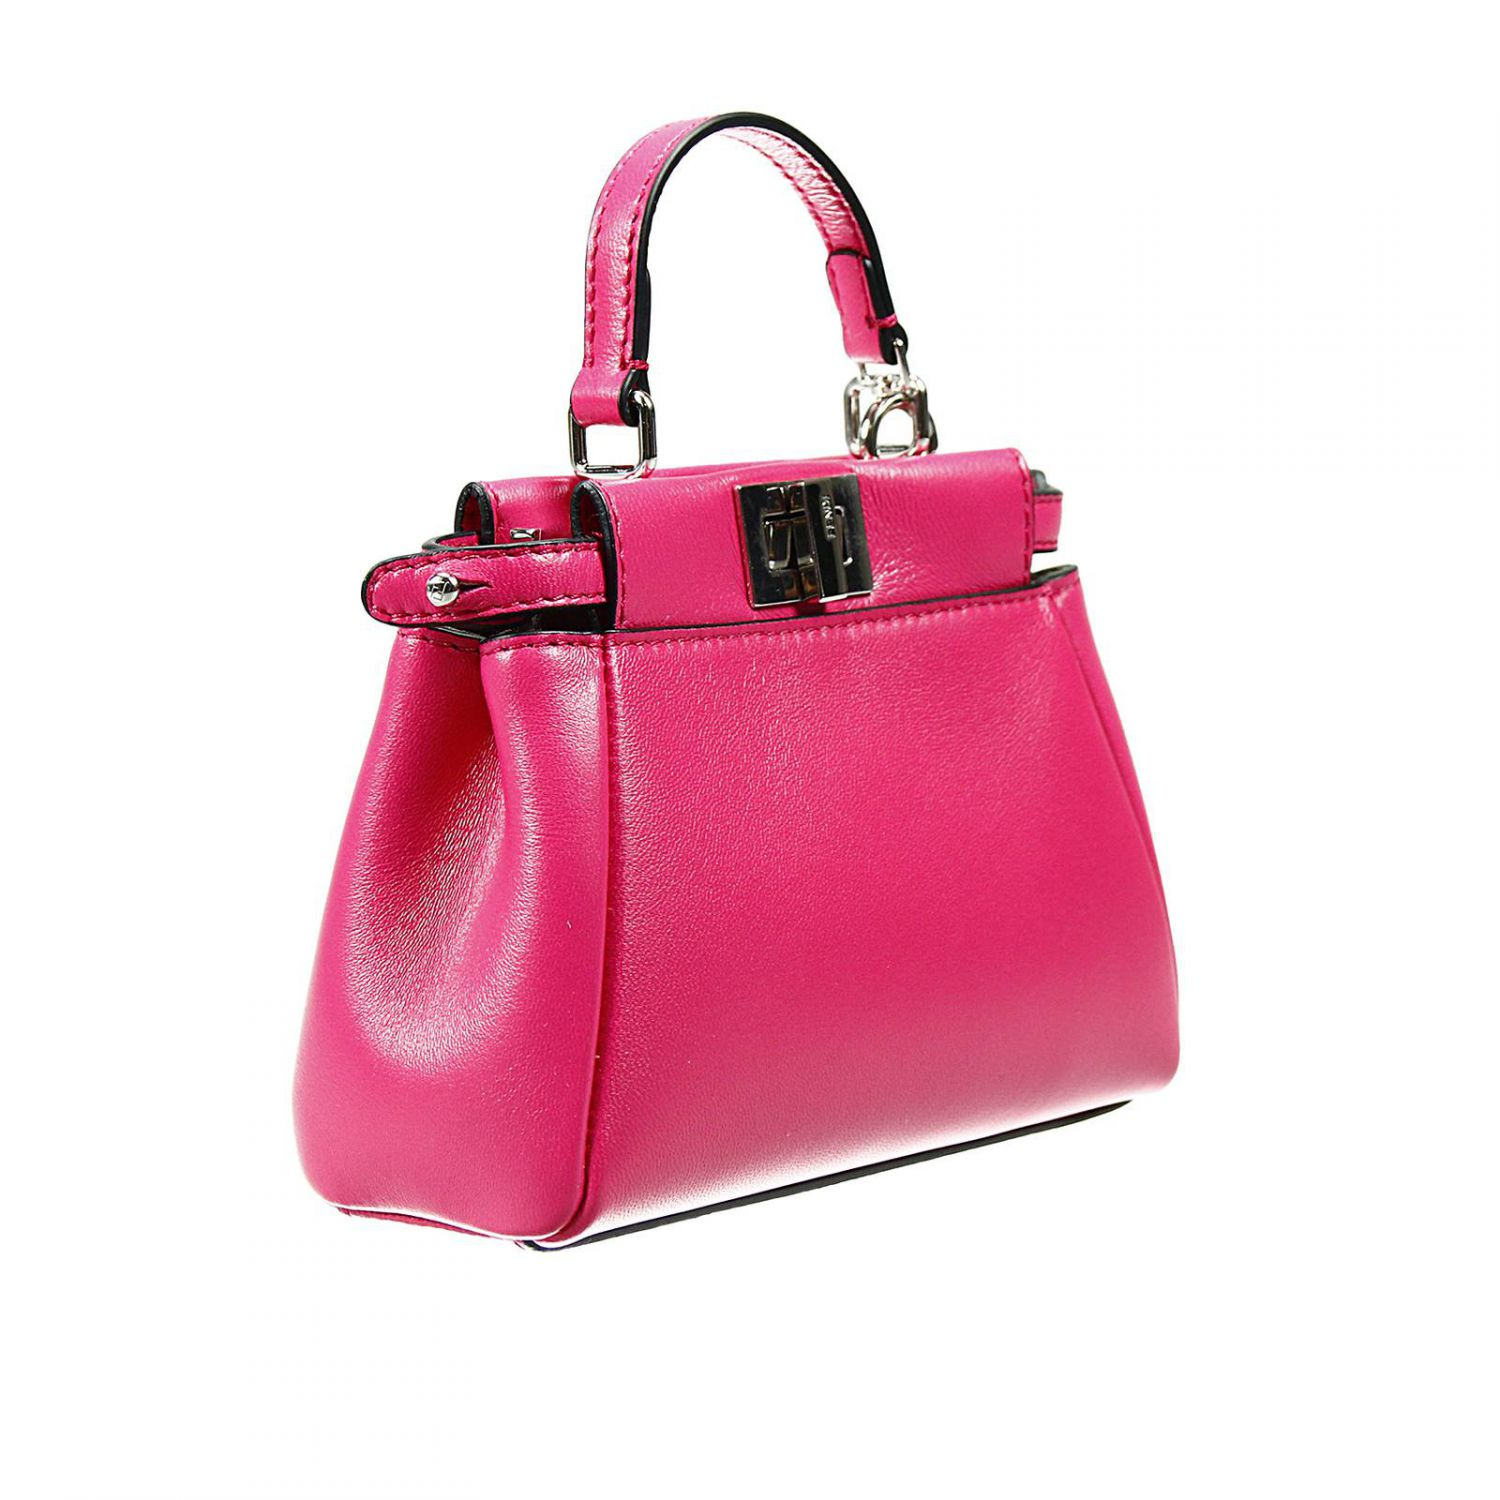 Lyst - Fendi Handbag Leather With Shoulder Micro Peekaboo Bag in Pink